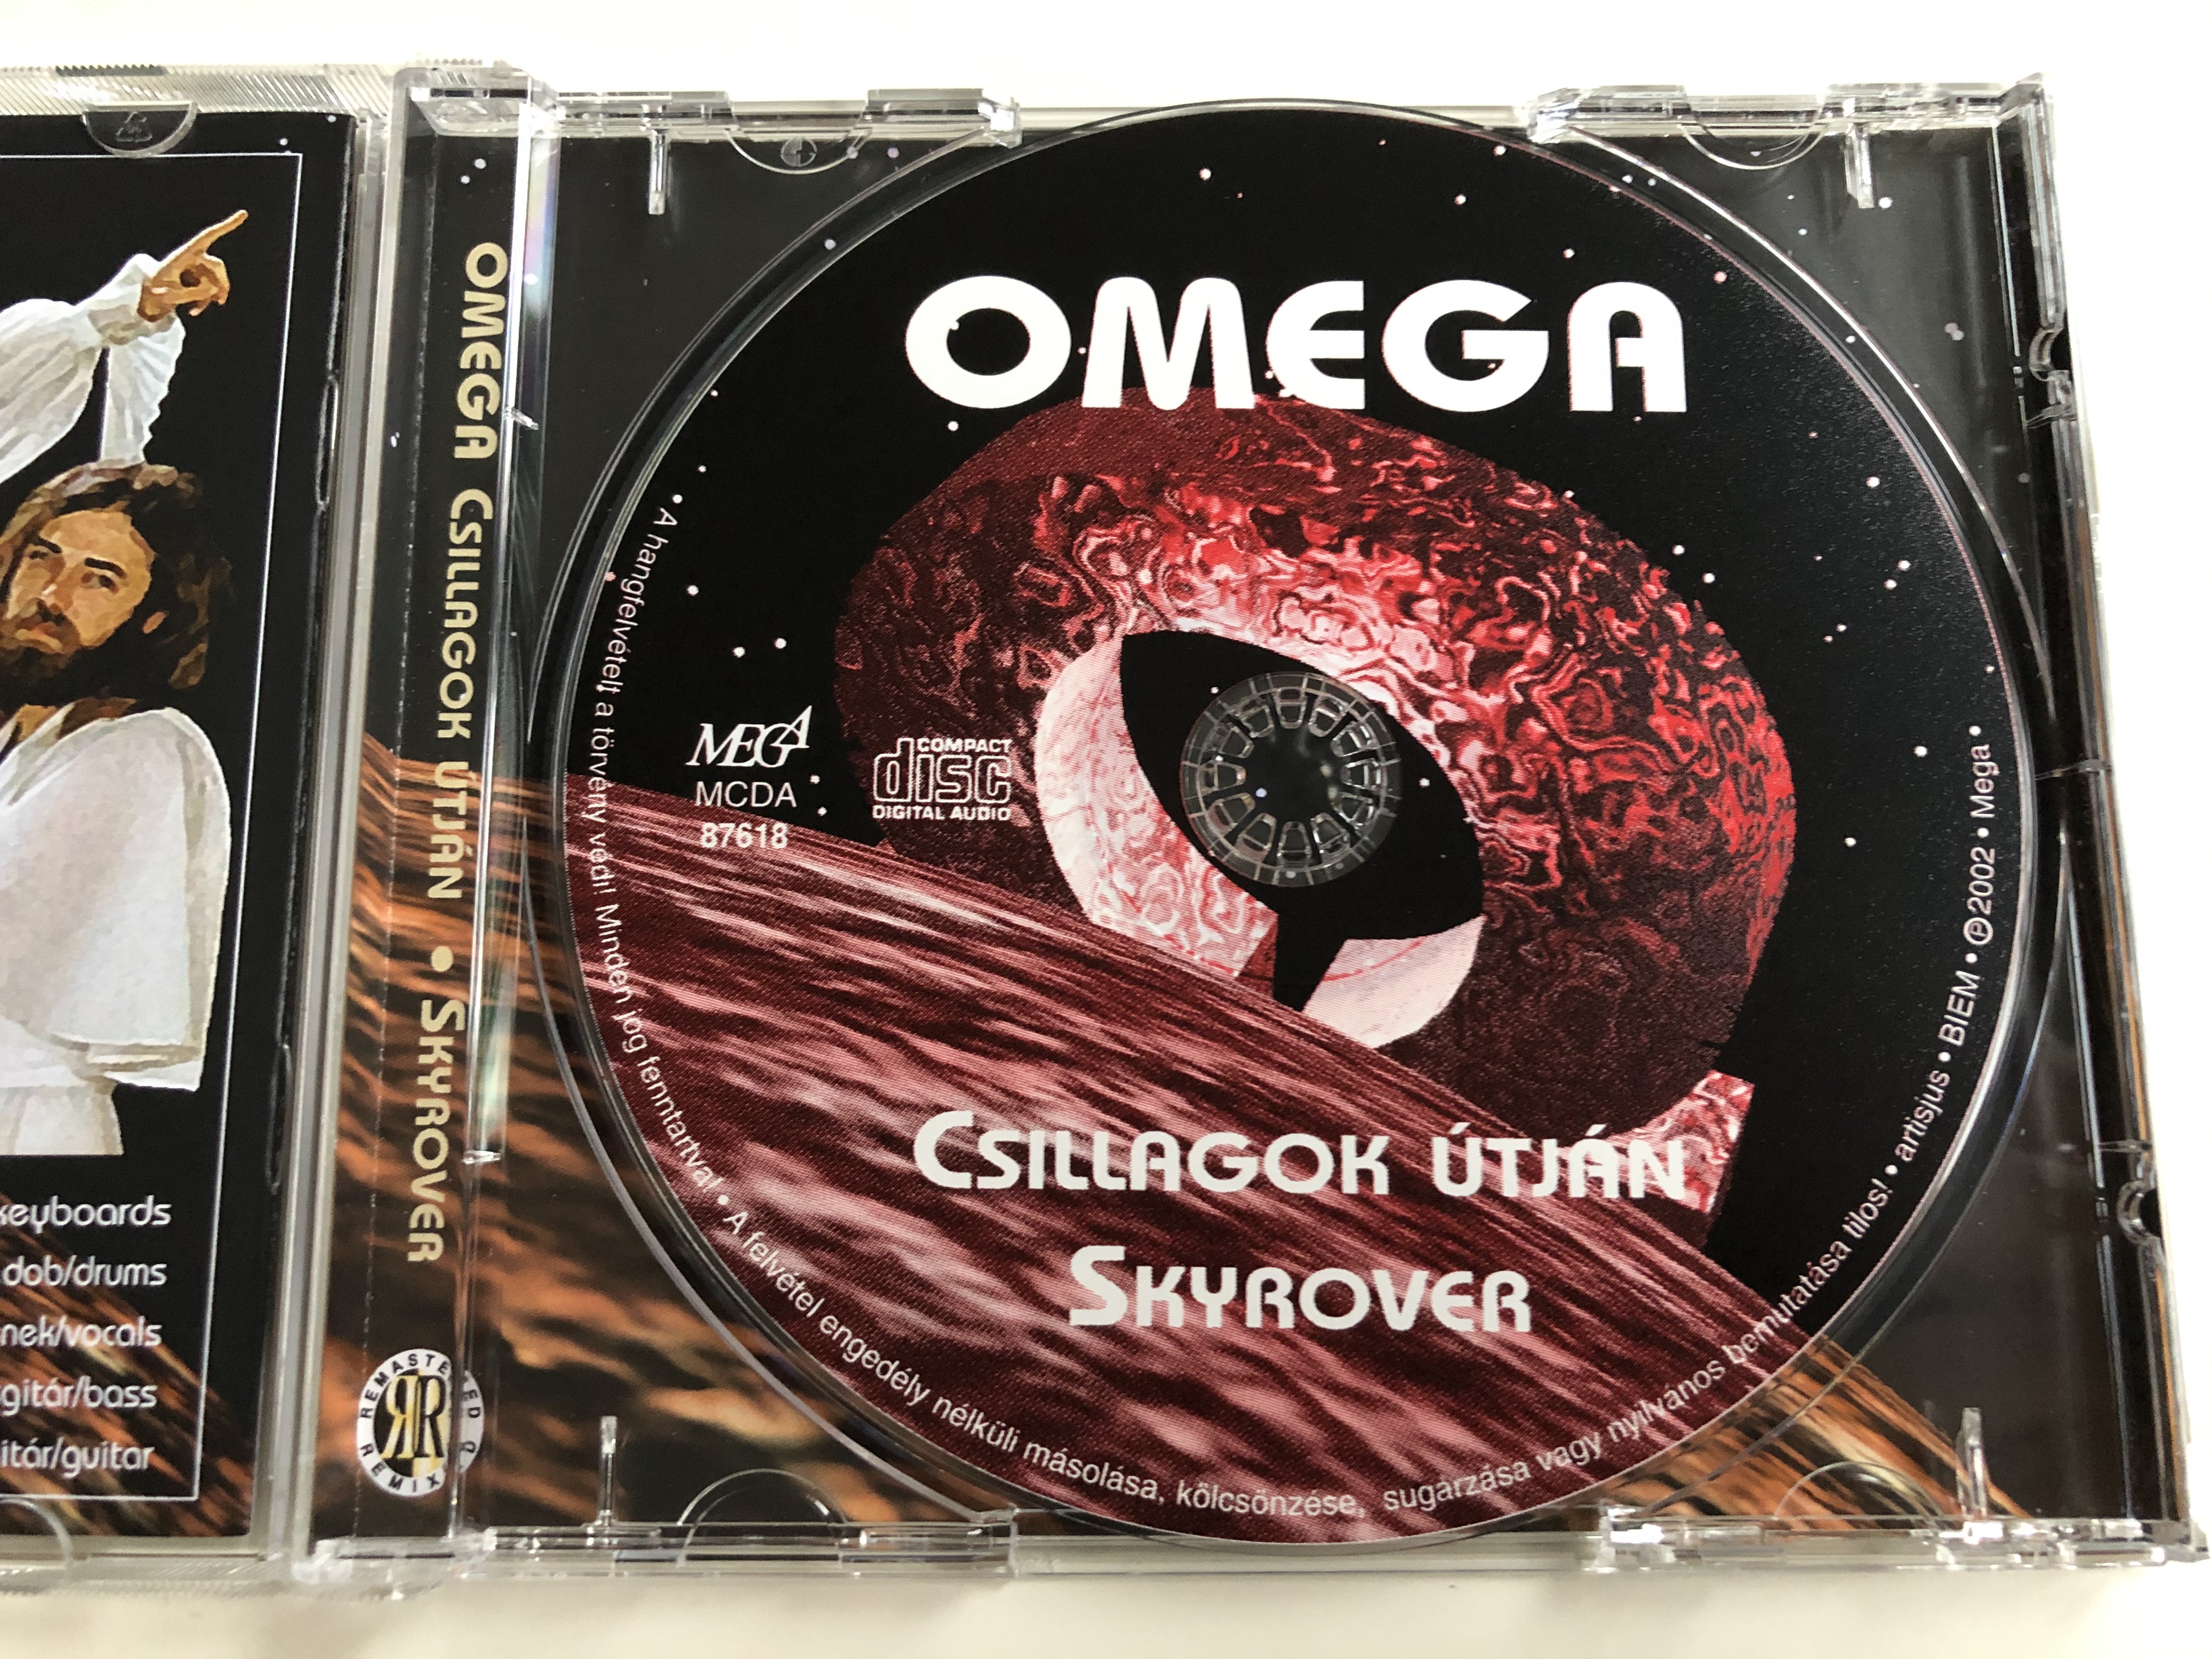 omega-csillagok-tj-n-skyrover-omega-viii.-mega-audio-cd-2002-mcda-87618-8-.jpg